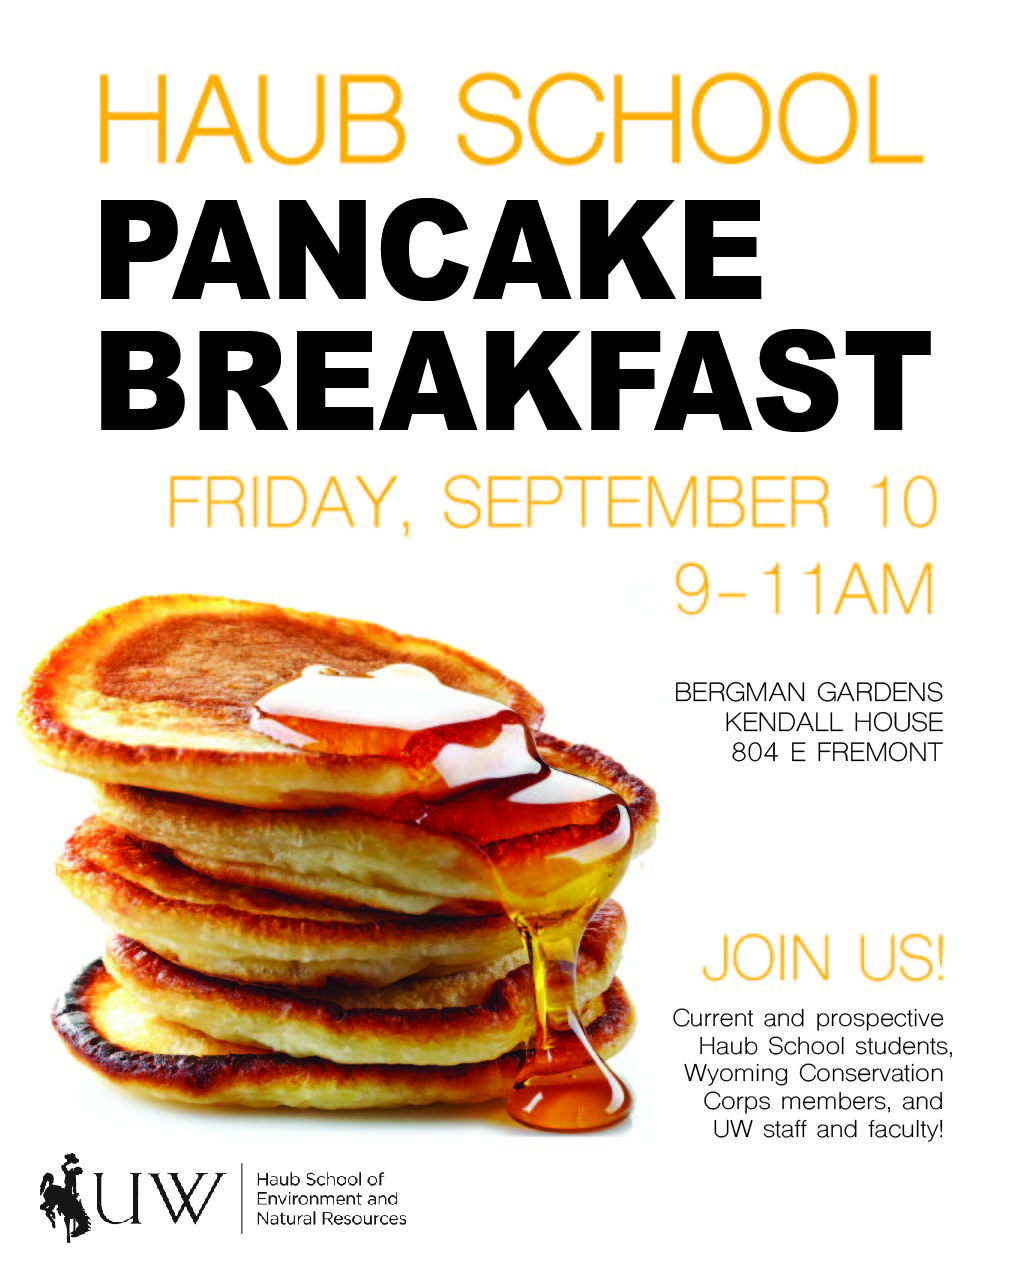 Haub School Pancake Breakfast: Friday, Sept 10, 9-11am, Bergman gardens